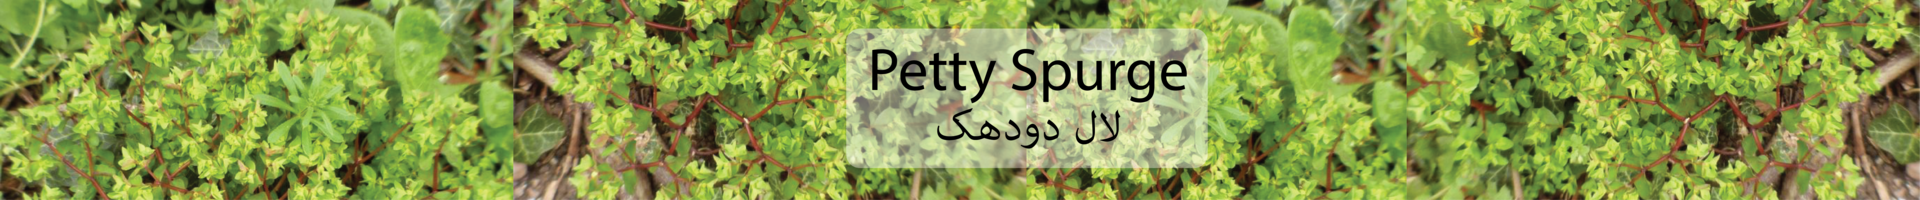 Petty Spurge / Ù„Ø§Ù„ Ø¯ÙˆØ¯Ú¾Ú©